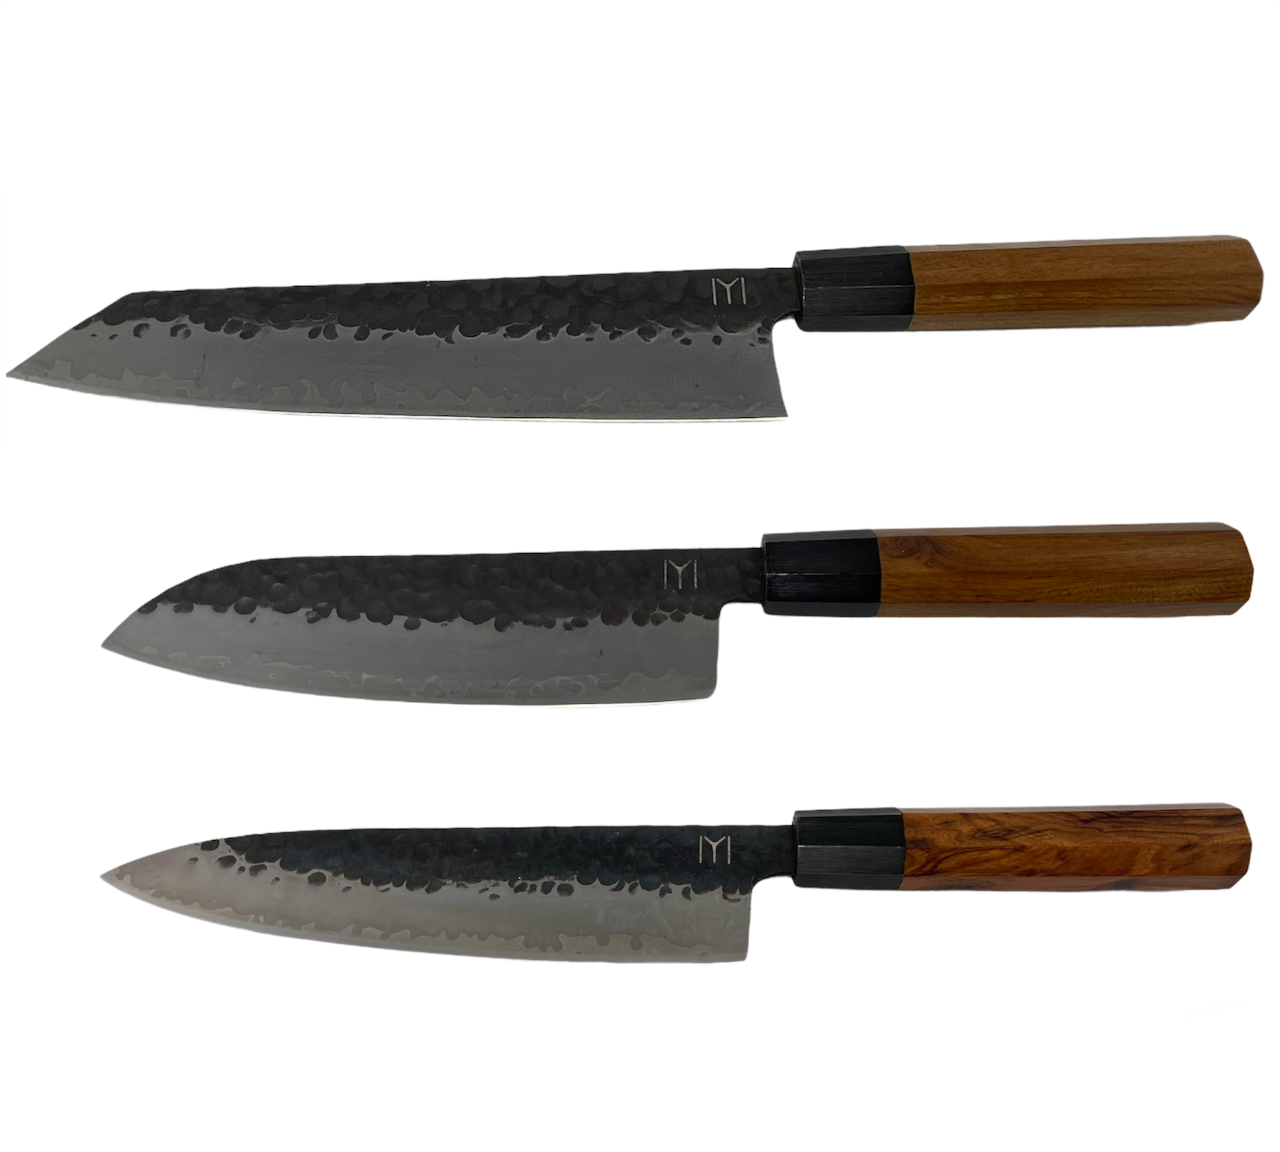  CuCut Kitchen Knife, 3 Pcs Knife Set with